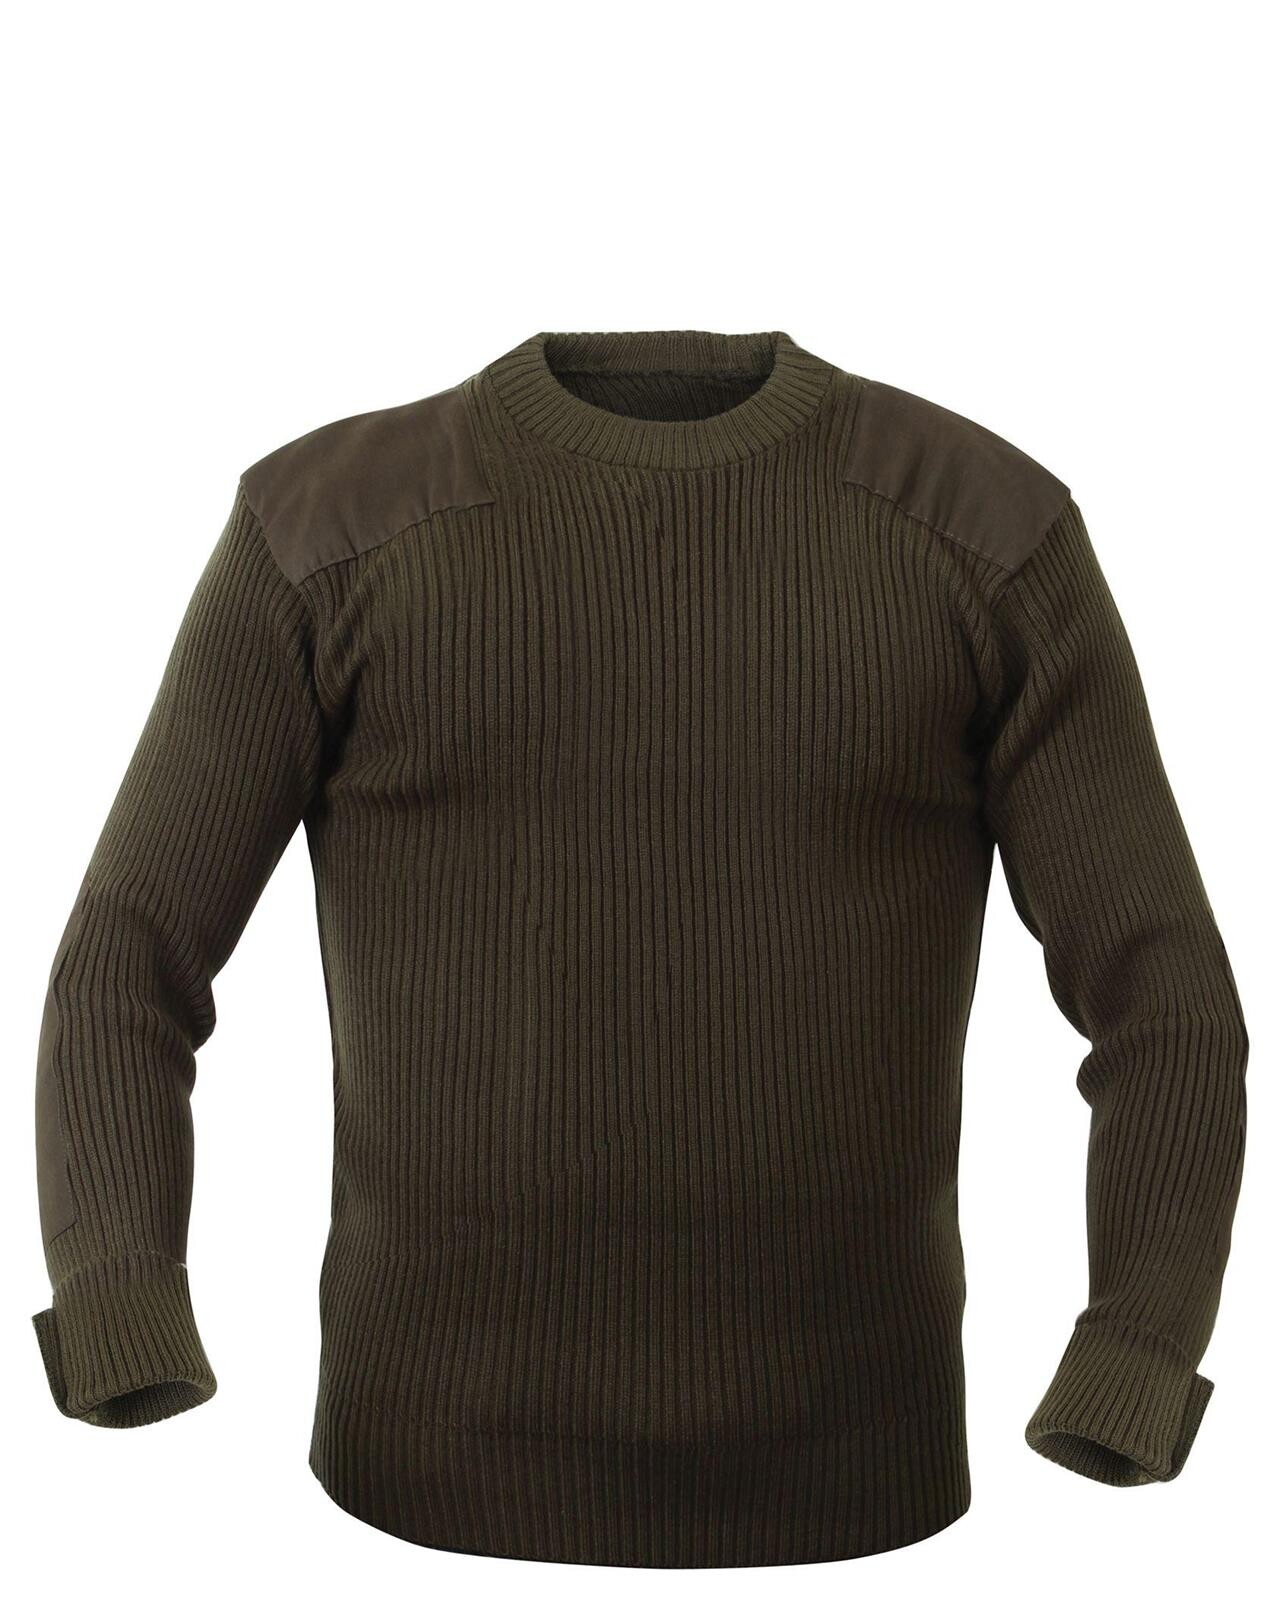 7: Rothco Commando Sweater - G.I. Style (Oliven, S)